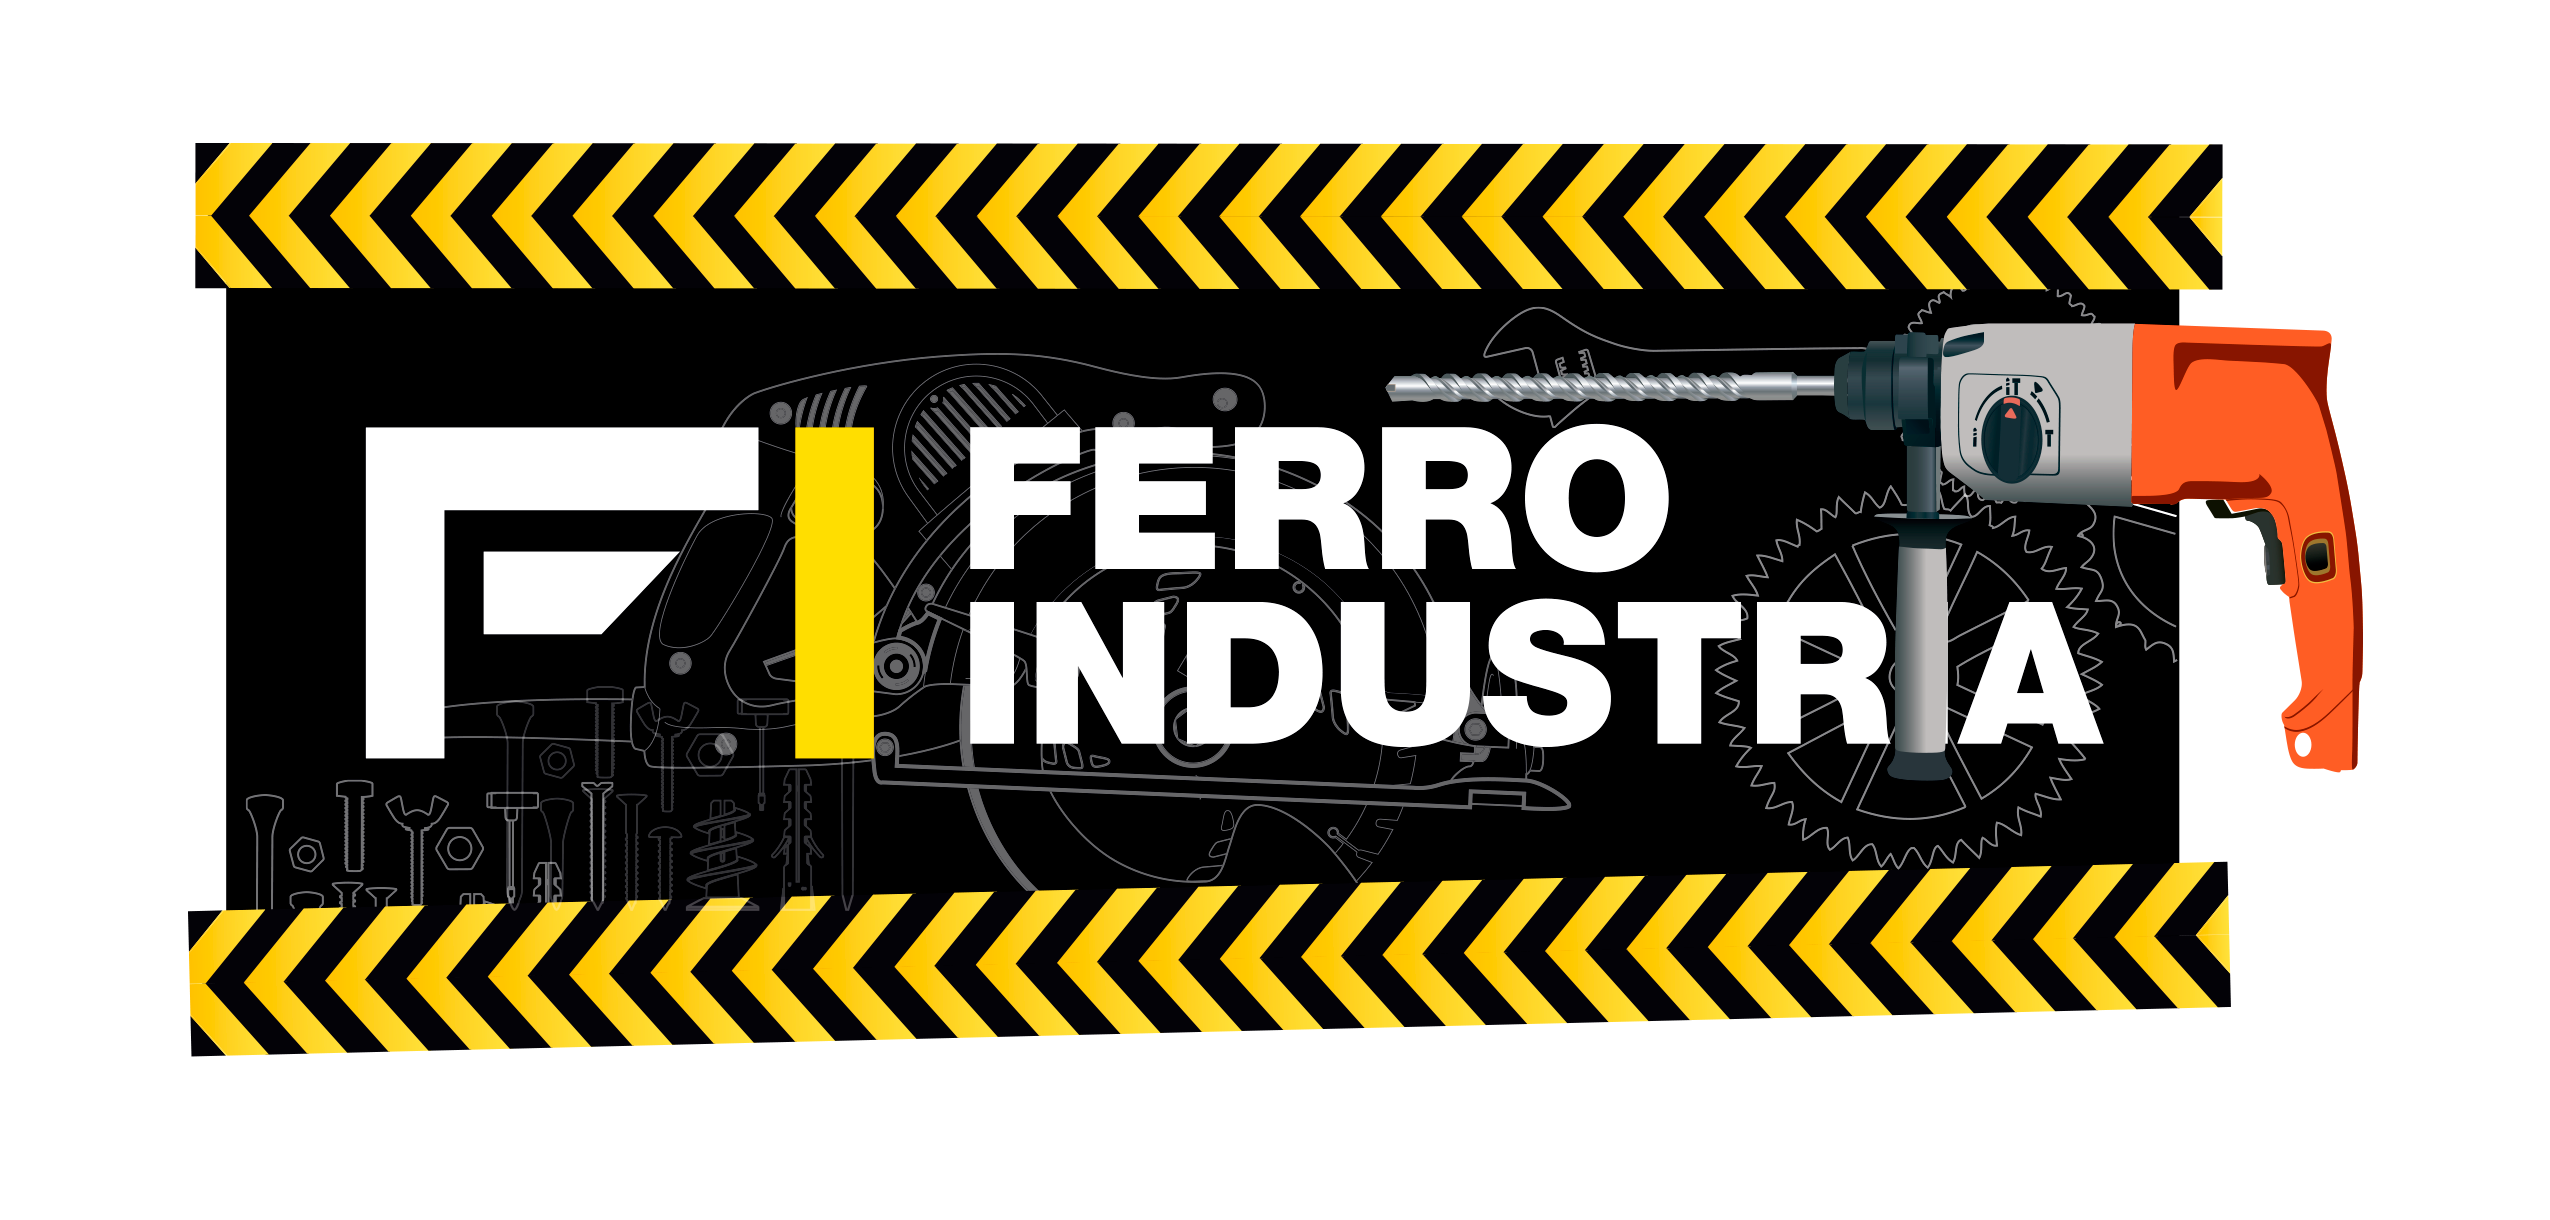 Ferro Industria Guatemala